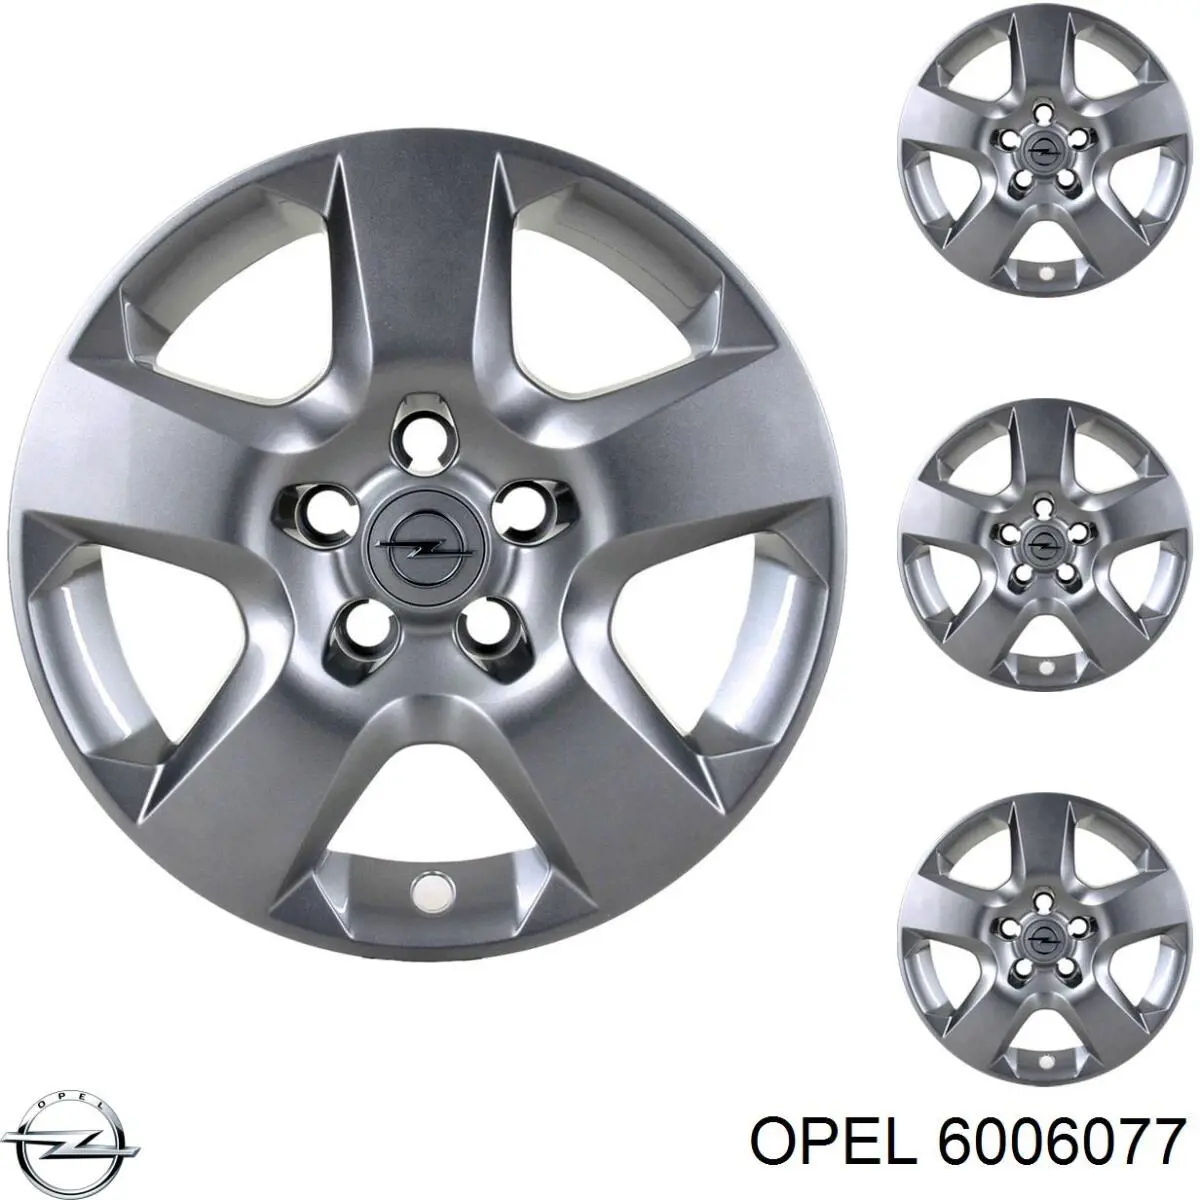 6006077 Opel tapacubos de ruedas